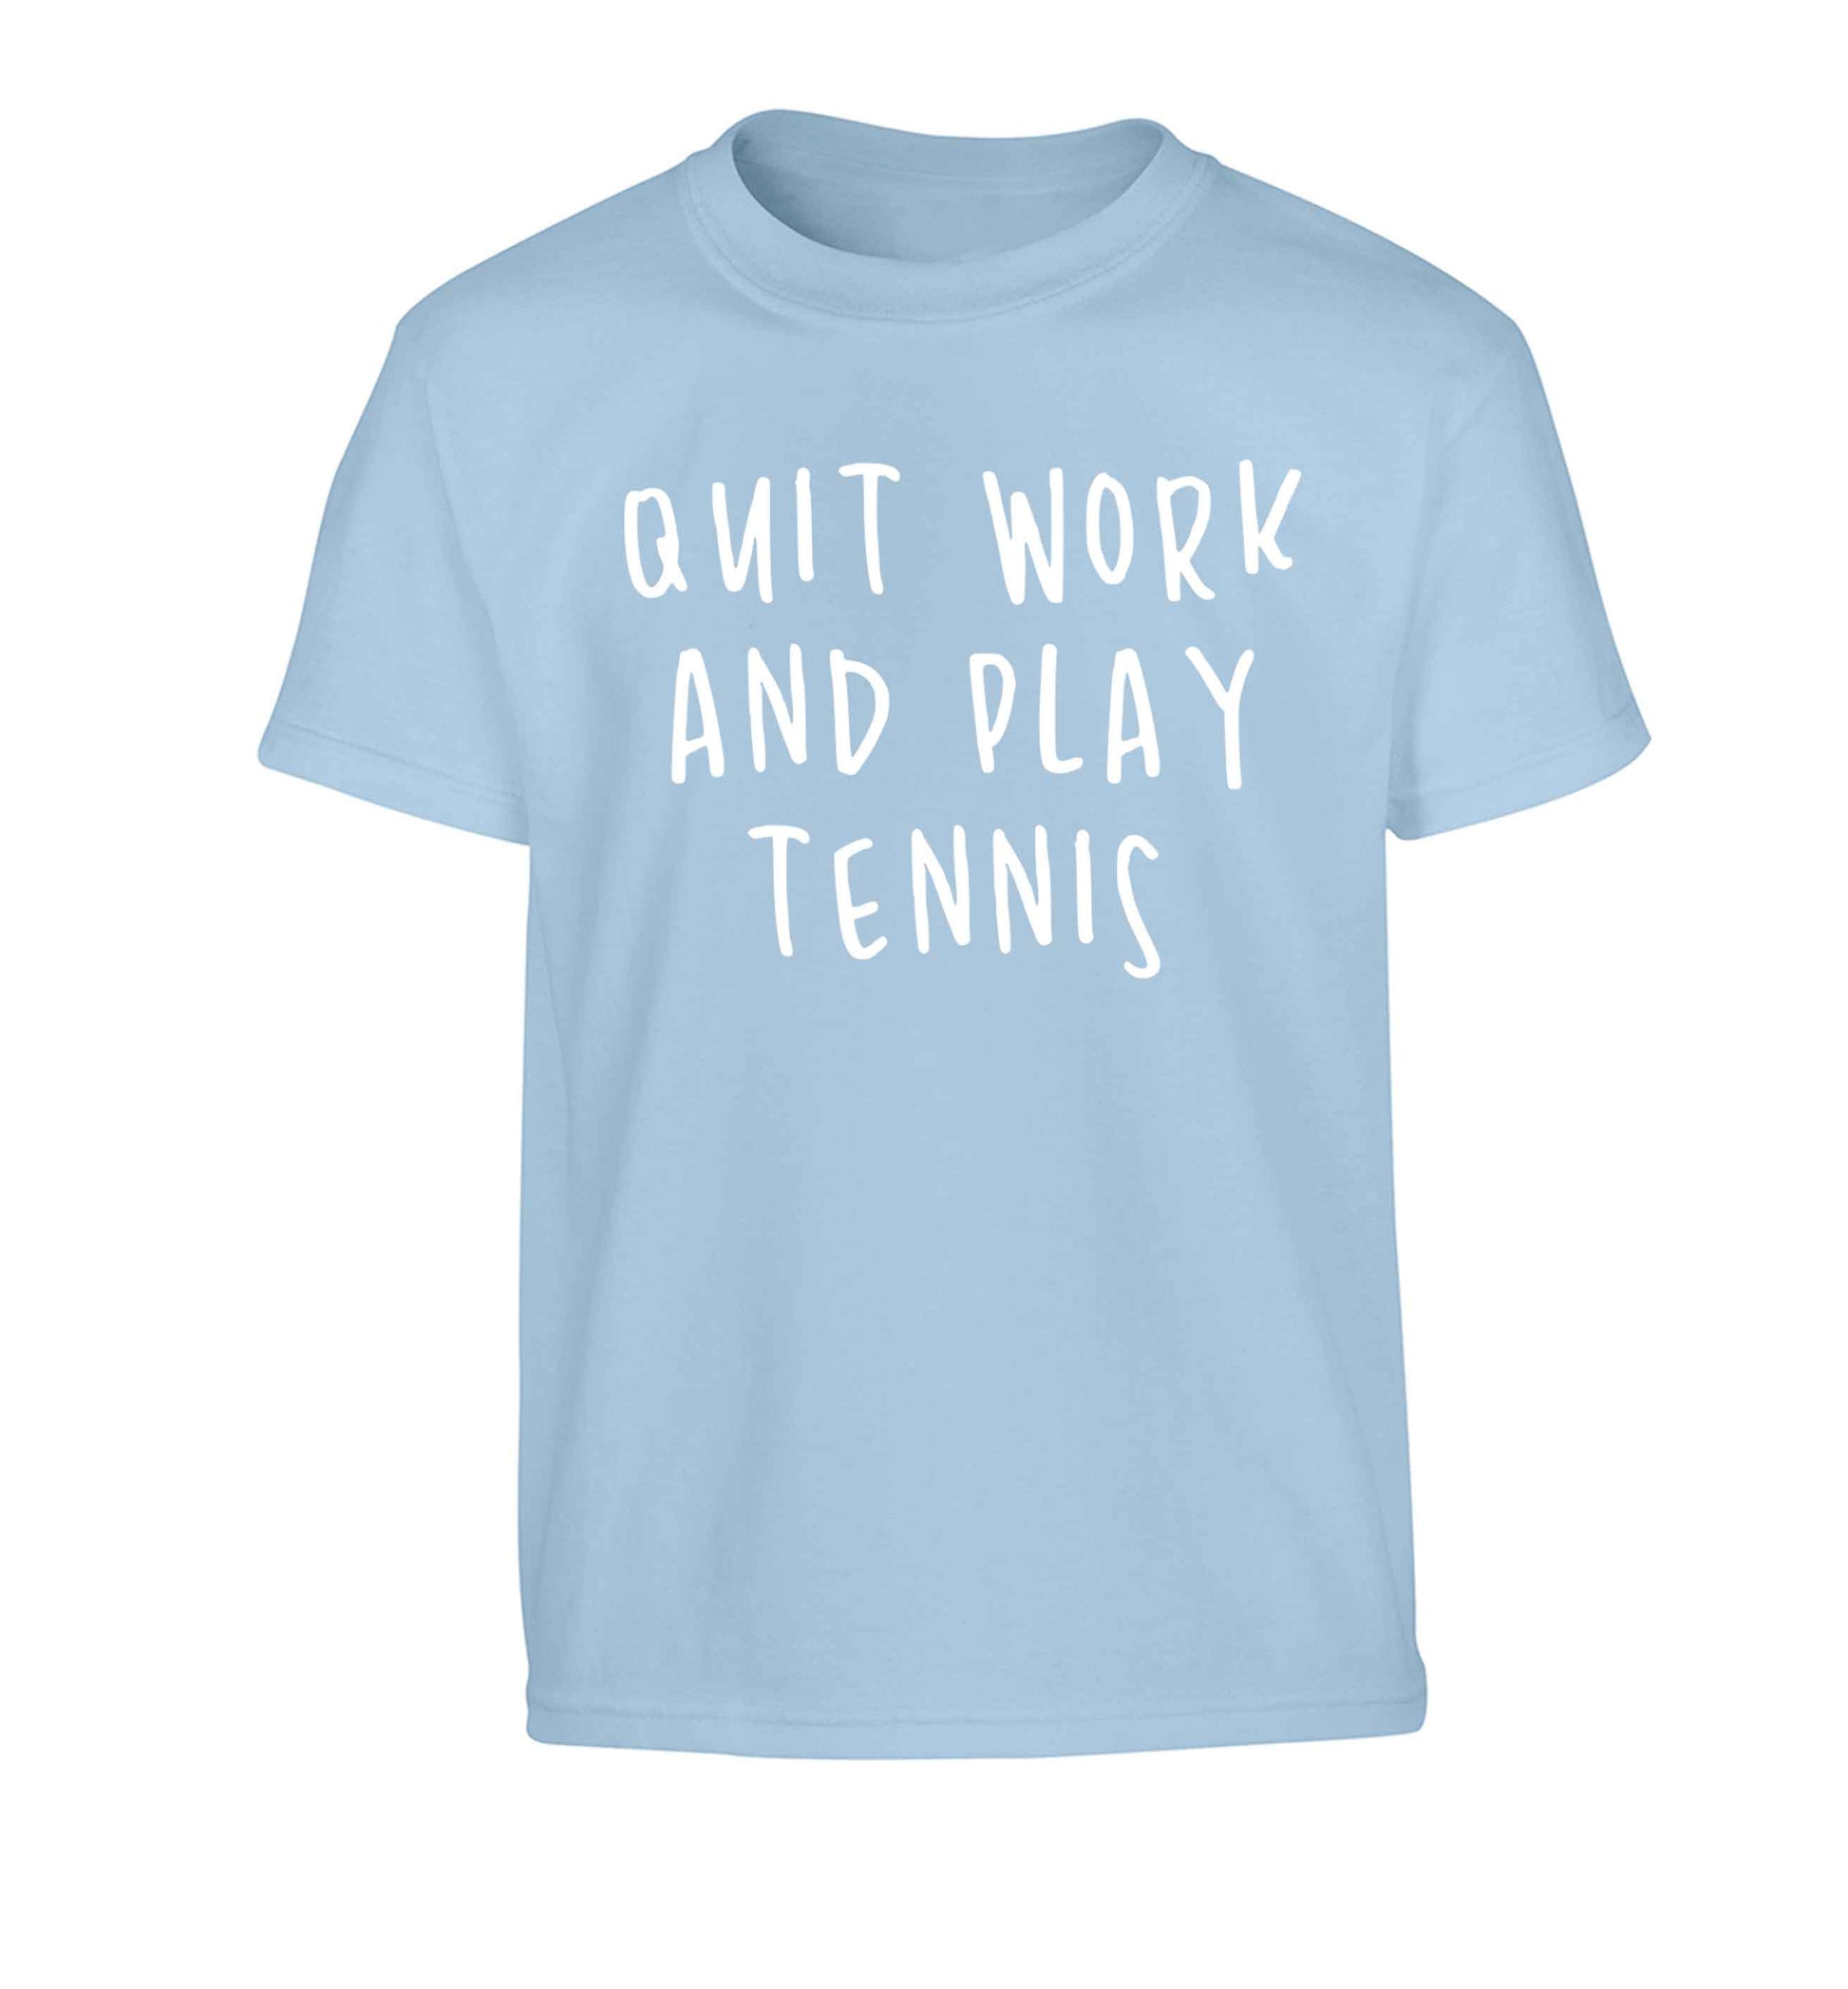 Quit work and play tennis Children's light blue Tshirt 12-13 Years